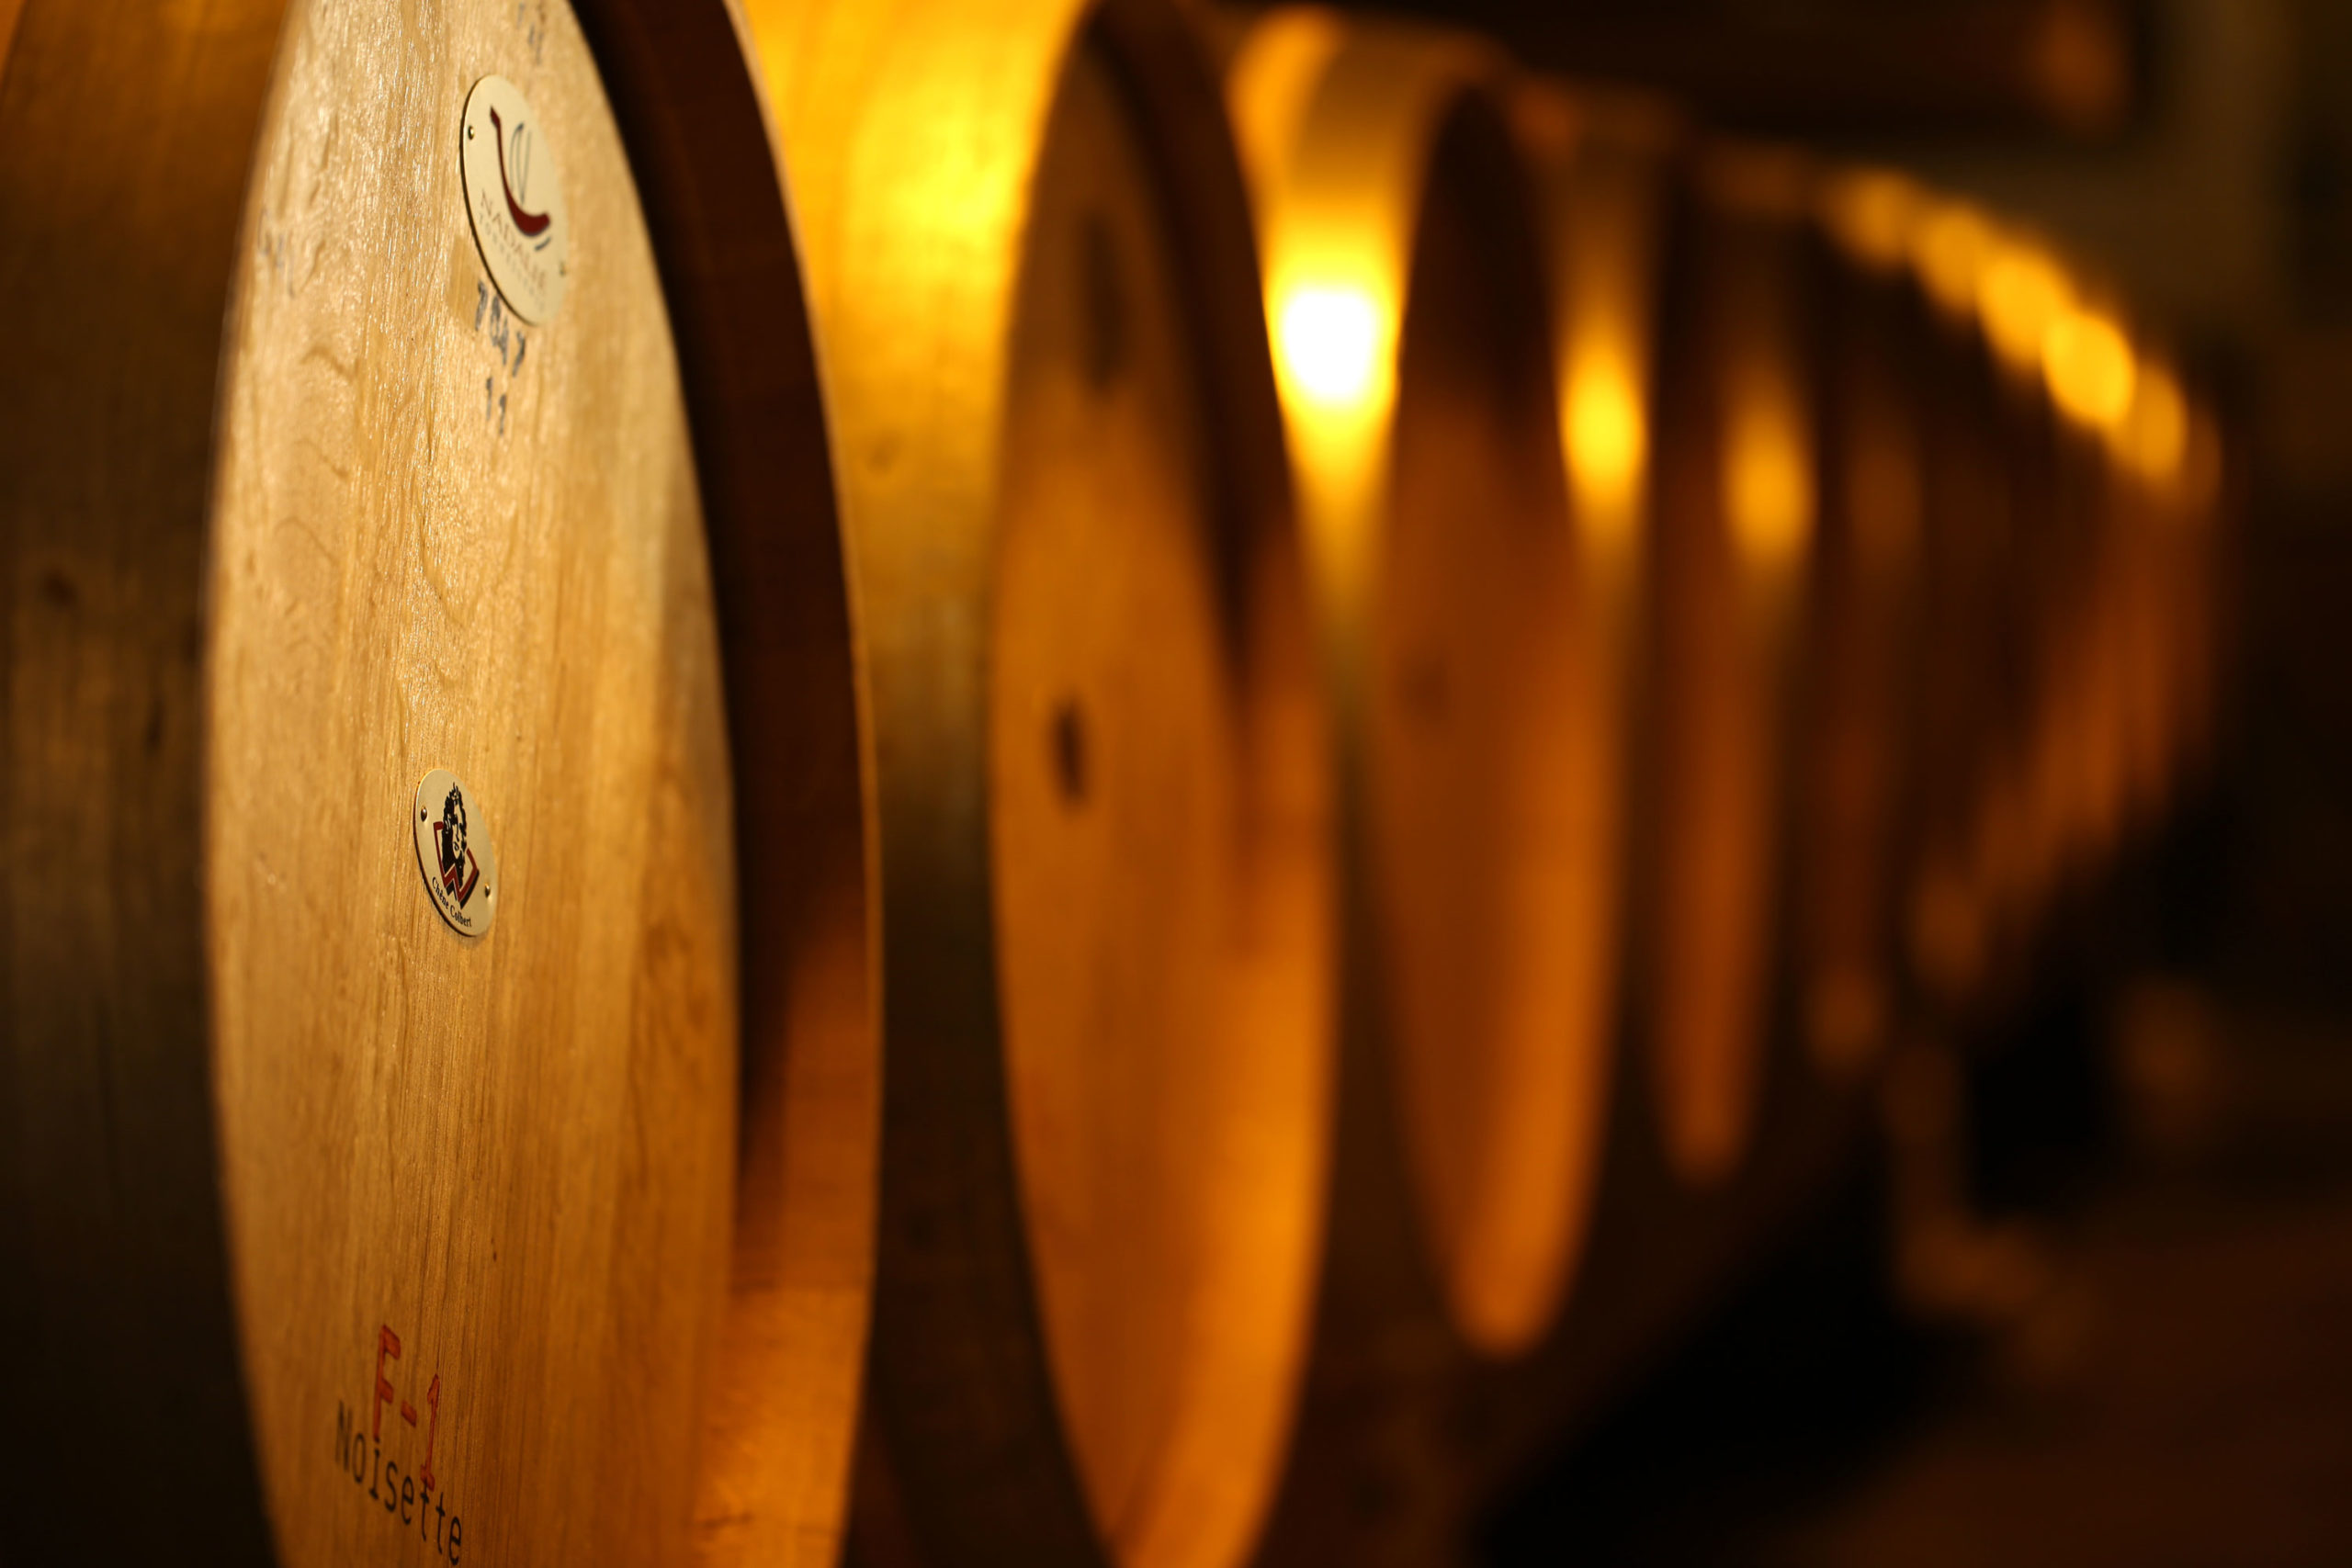 Lined up wine barrels